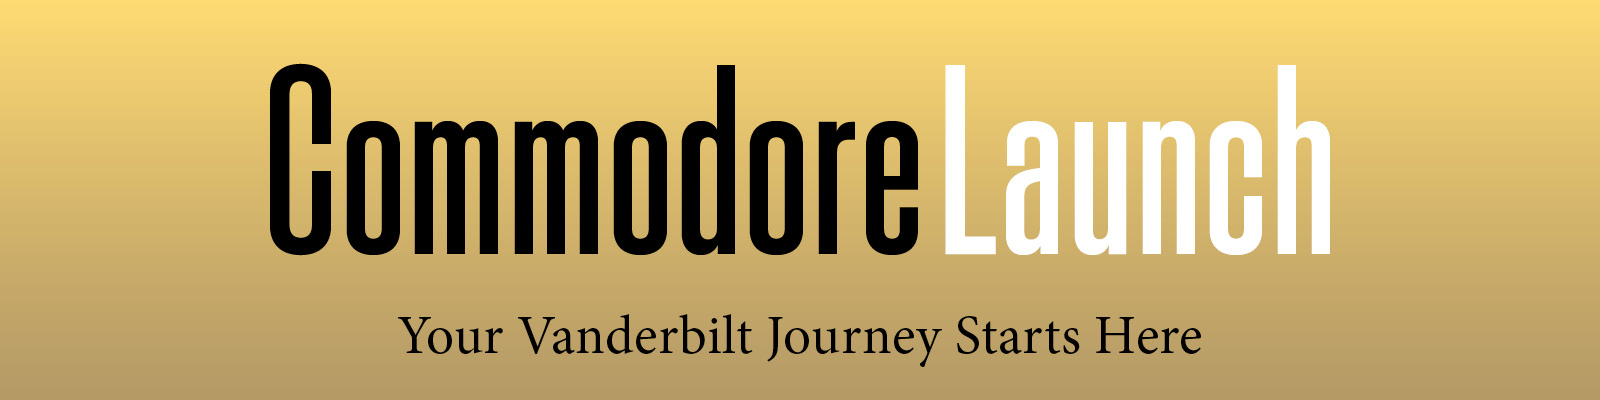 commodore launch: your vanderbilt journey starts here